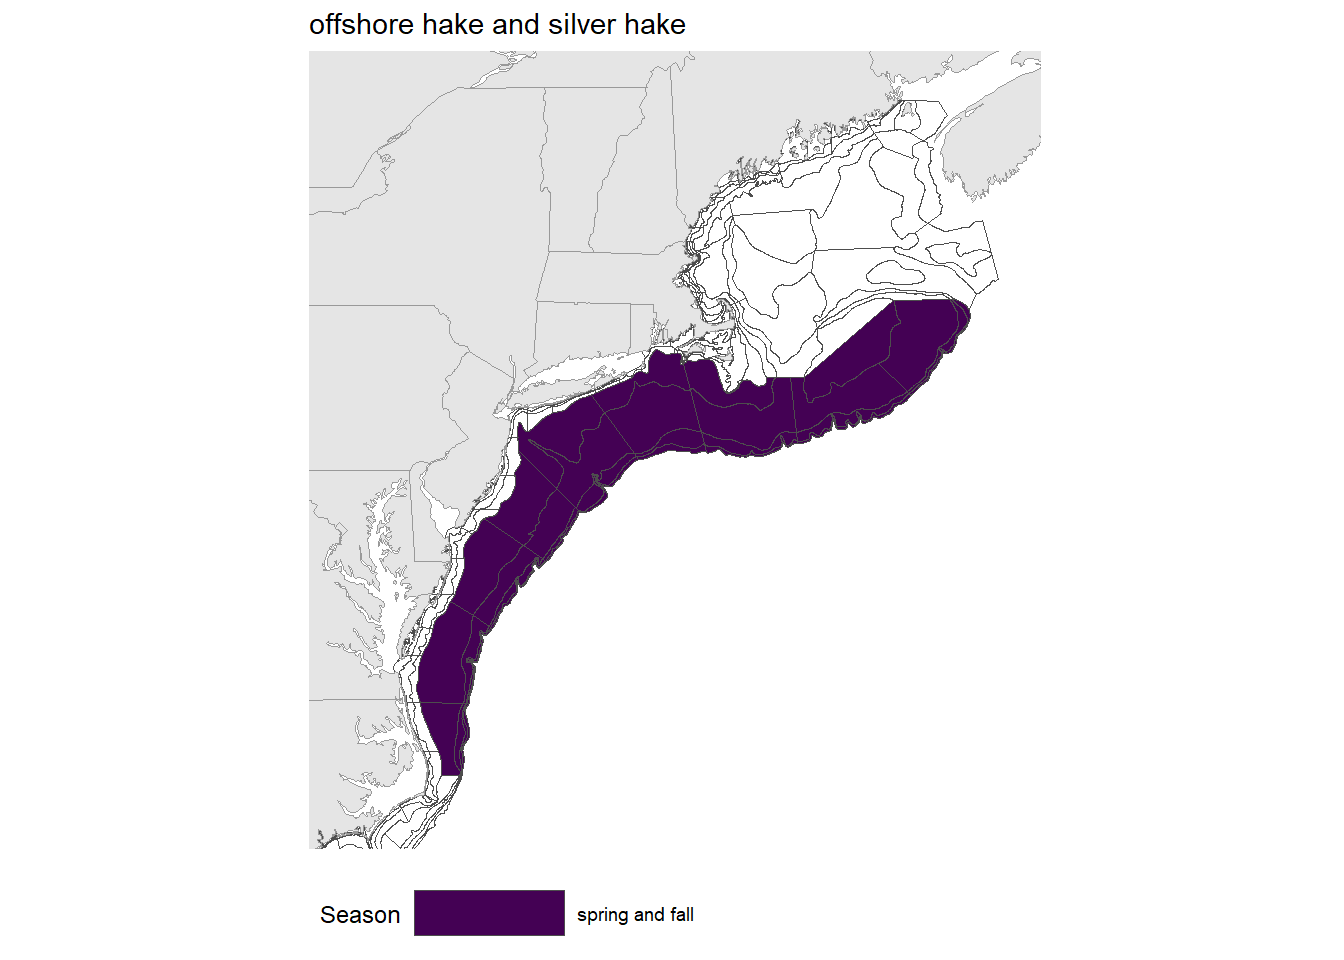 Strata map for the offshore hake and silver hake (Merluccius albidus/Merluccius bilinearis) stock on the NE shelf.